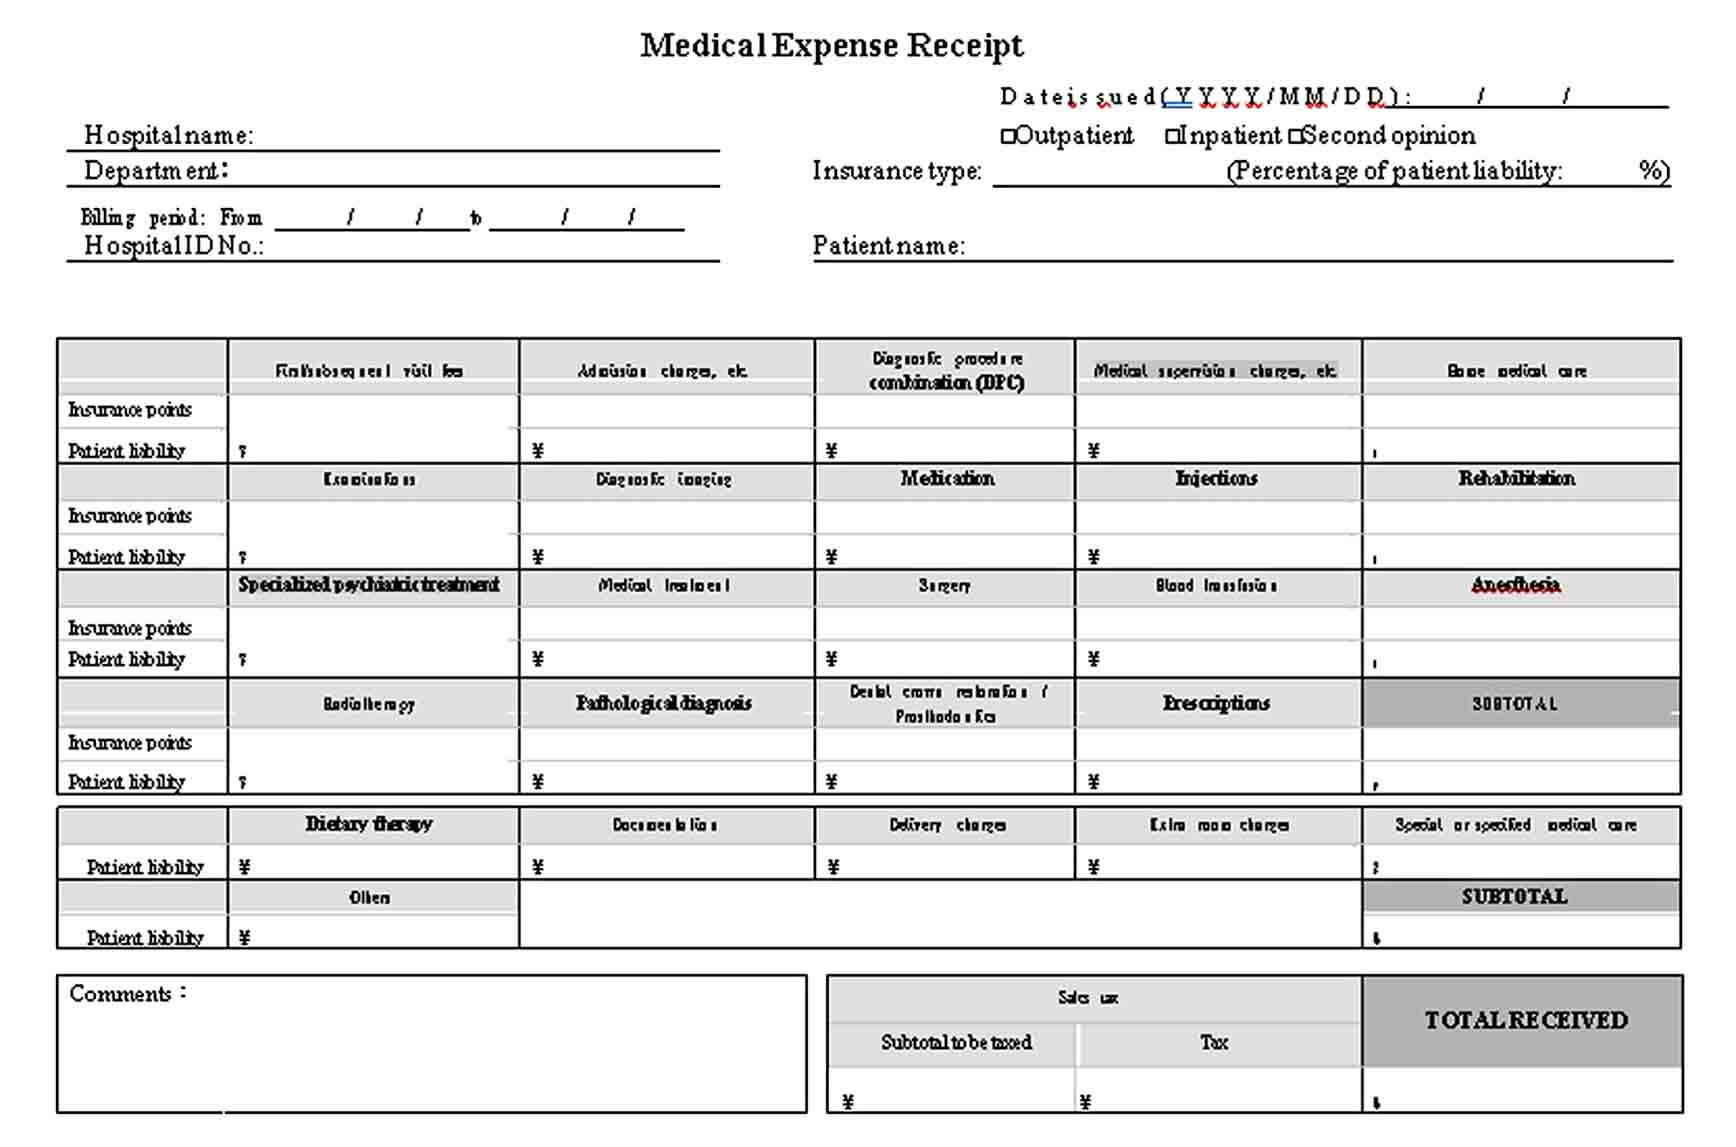 Medical Expense Receipt 1